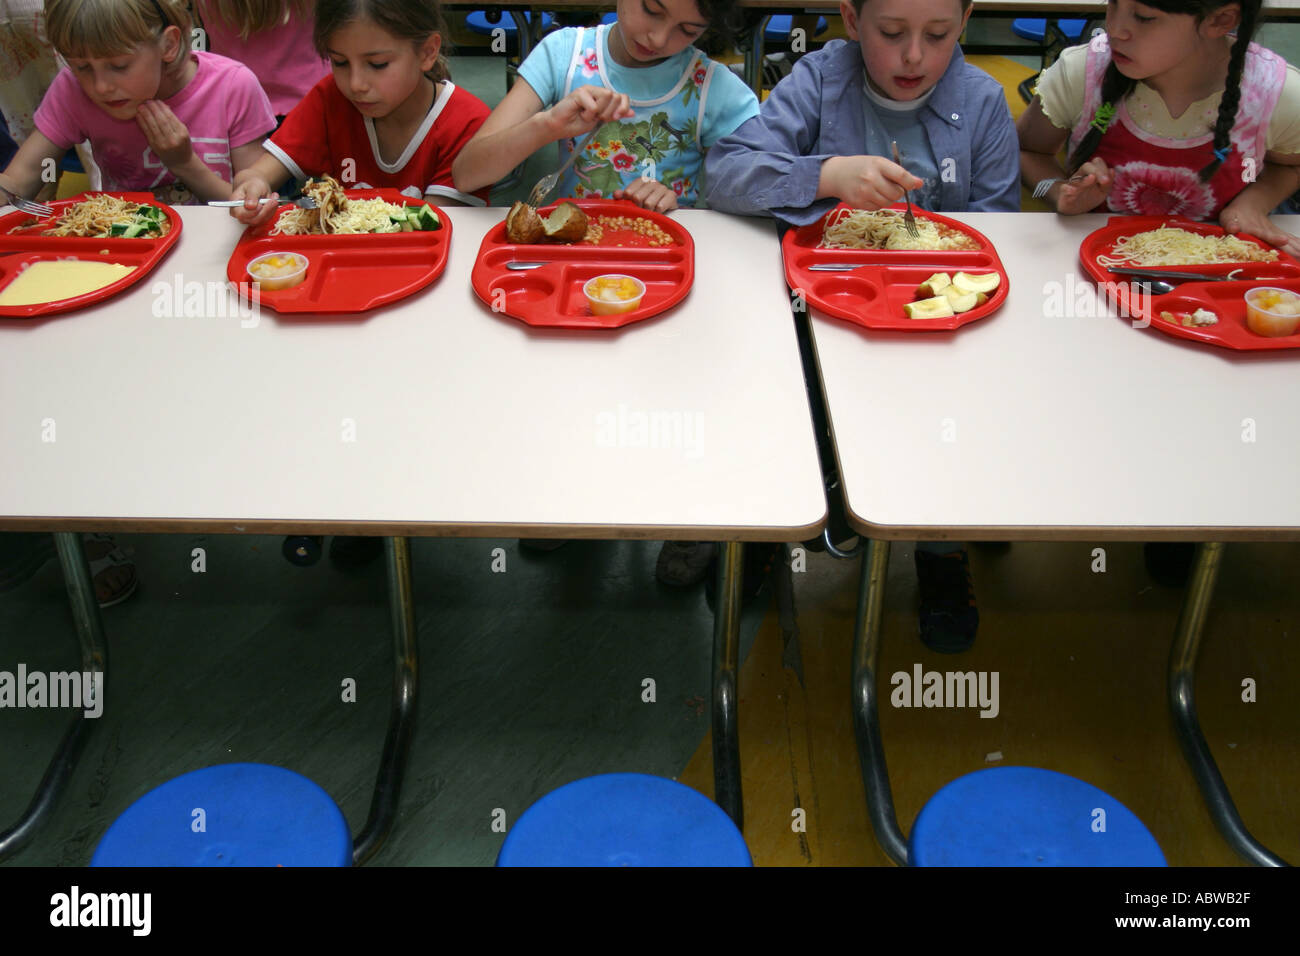 Children eating school dinners, Betty Layward school, London, UK. 2004. Stock Photo